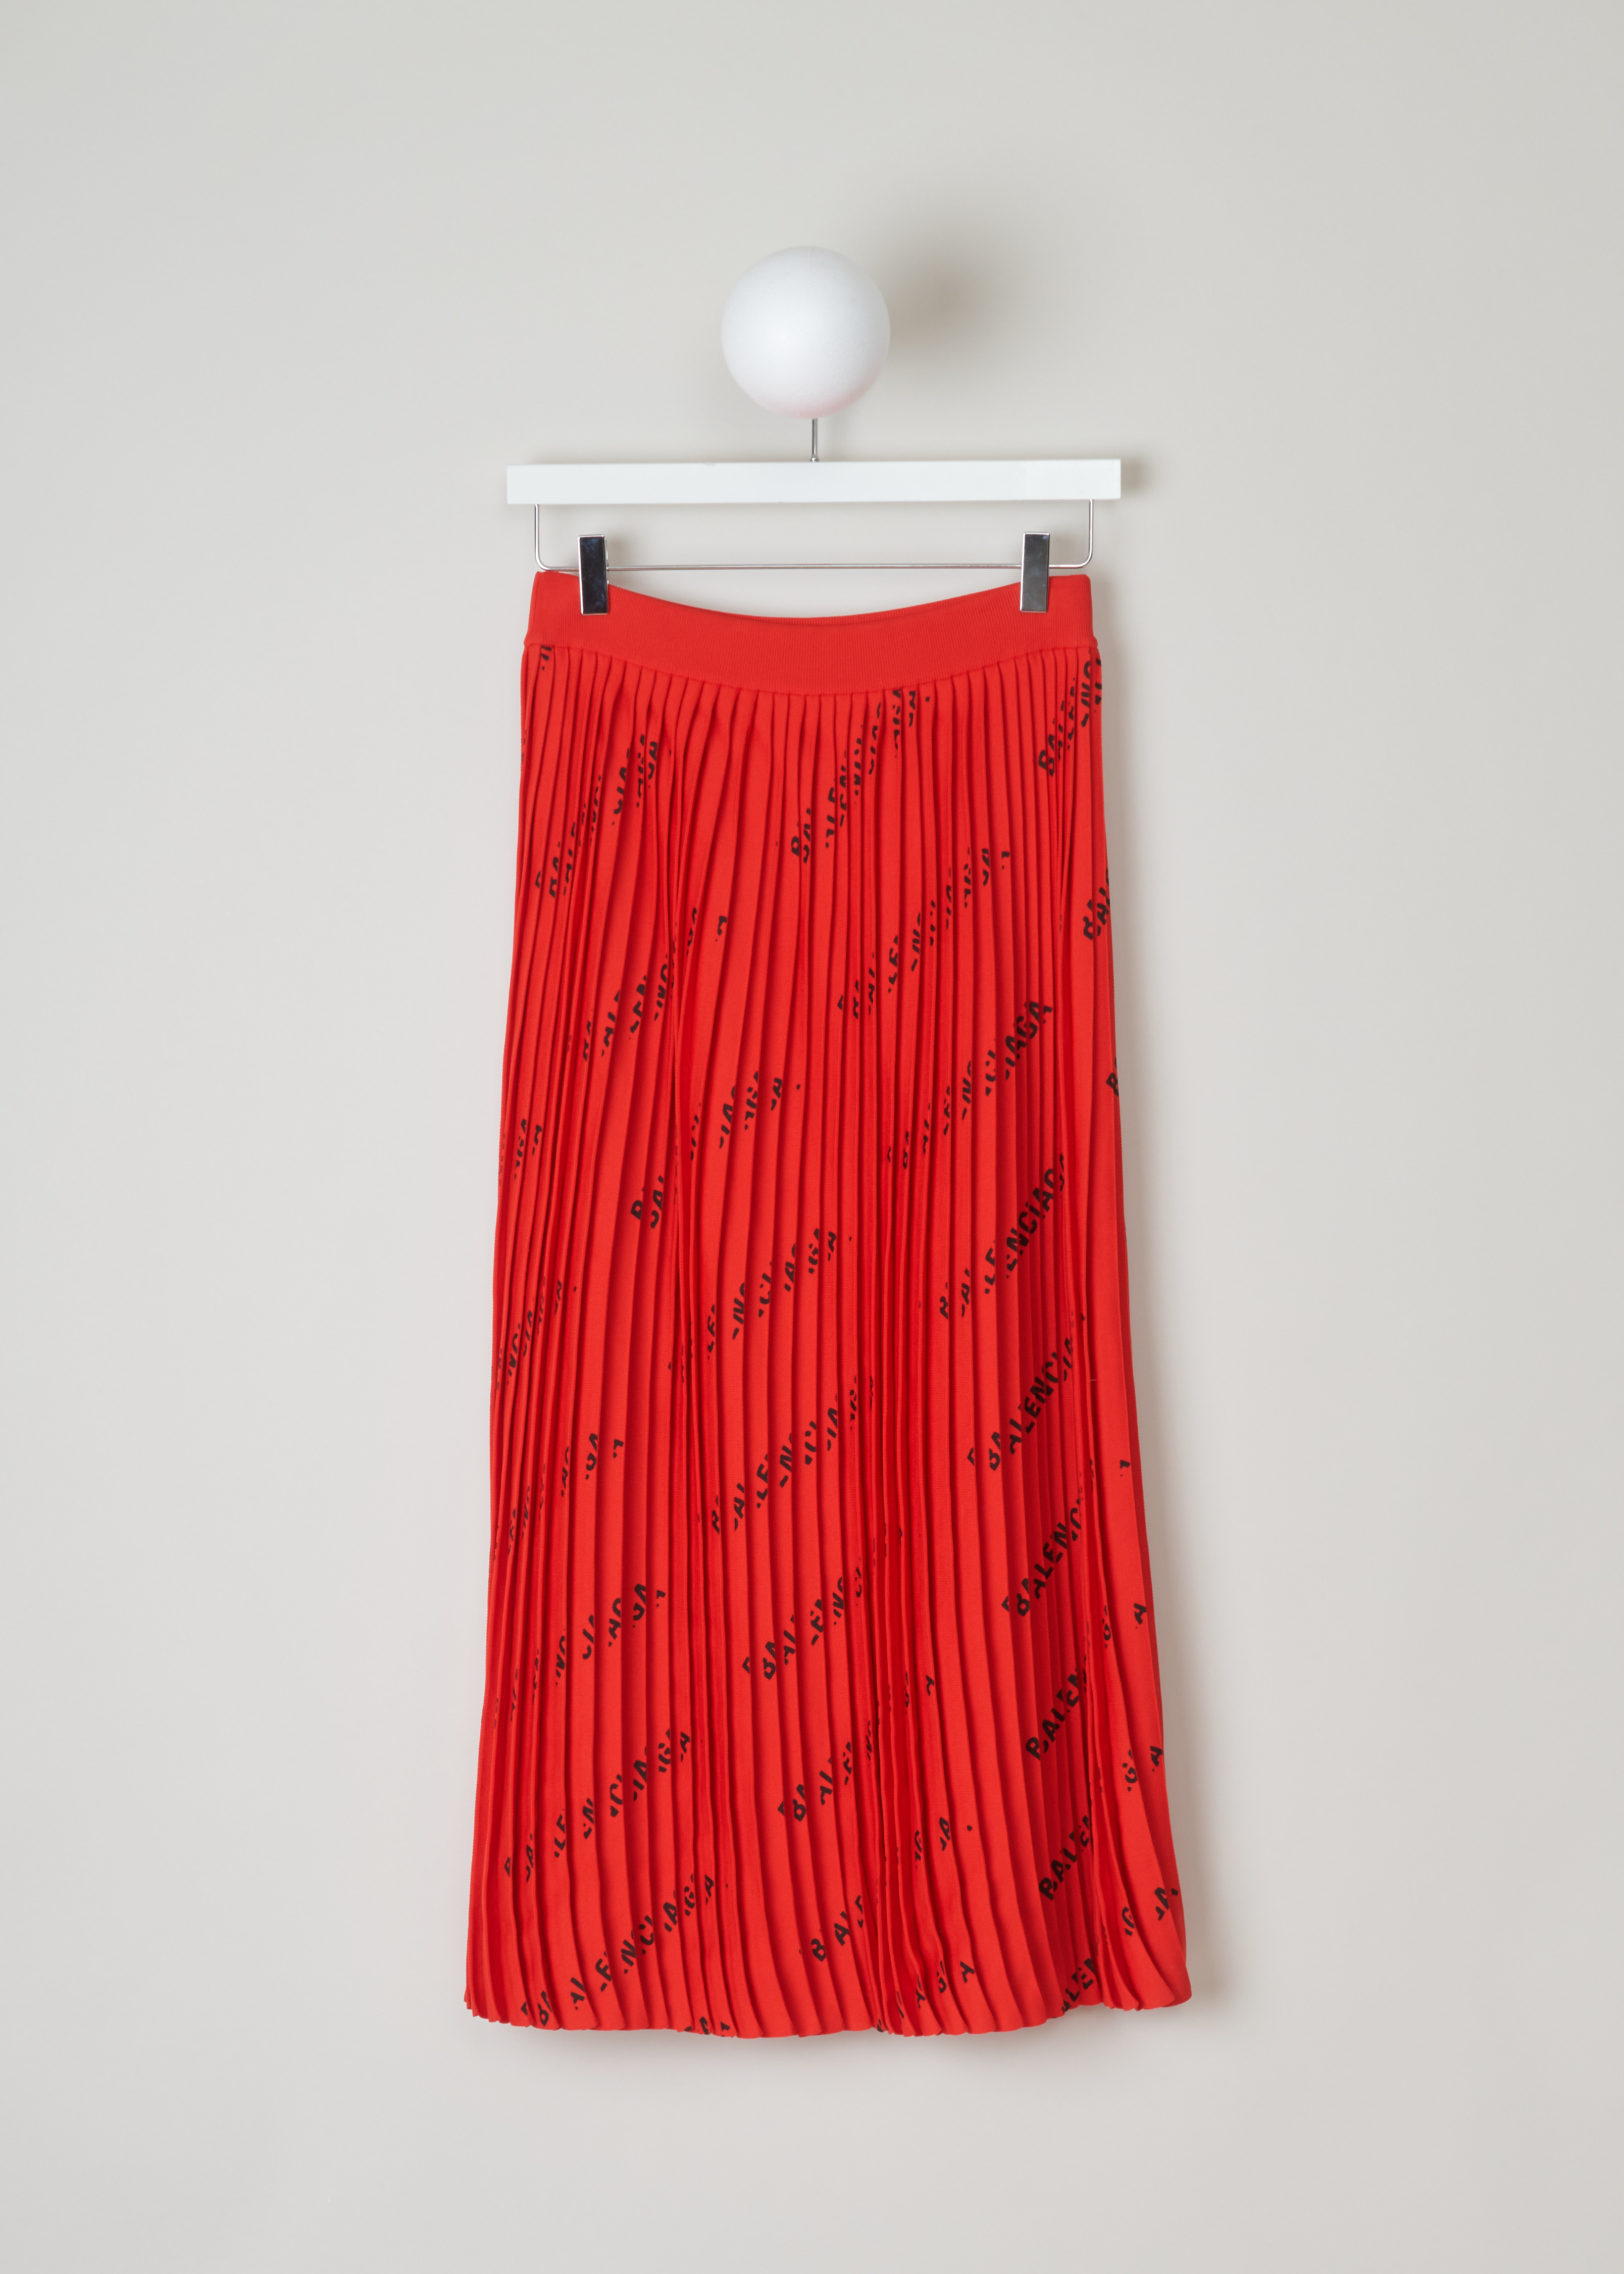 Balenciaga Plissé skirt with logo pattern 570845_T6140_6282 red back. Midi length plissé skirt with an all over logo print of the Balenciaga logo and an elasticated waistband.